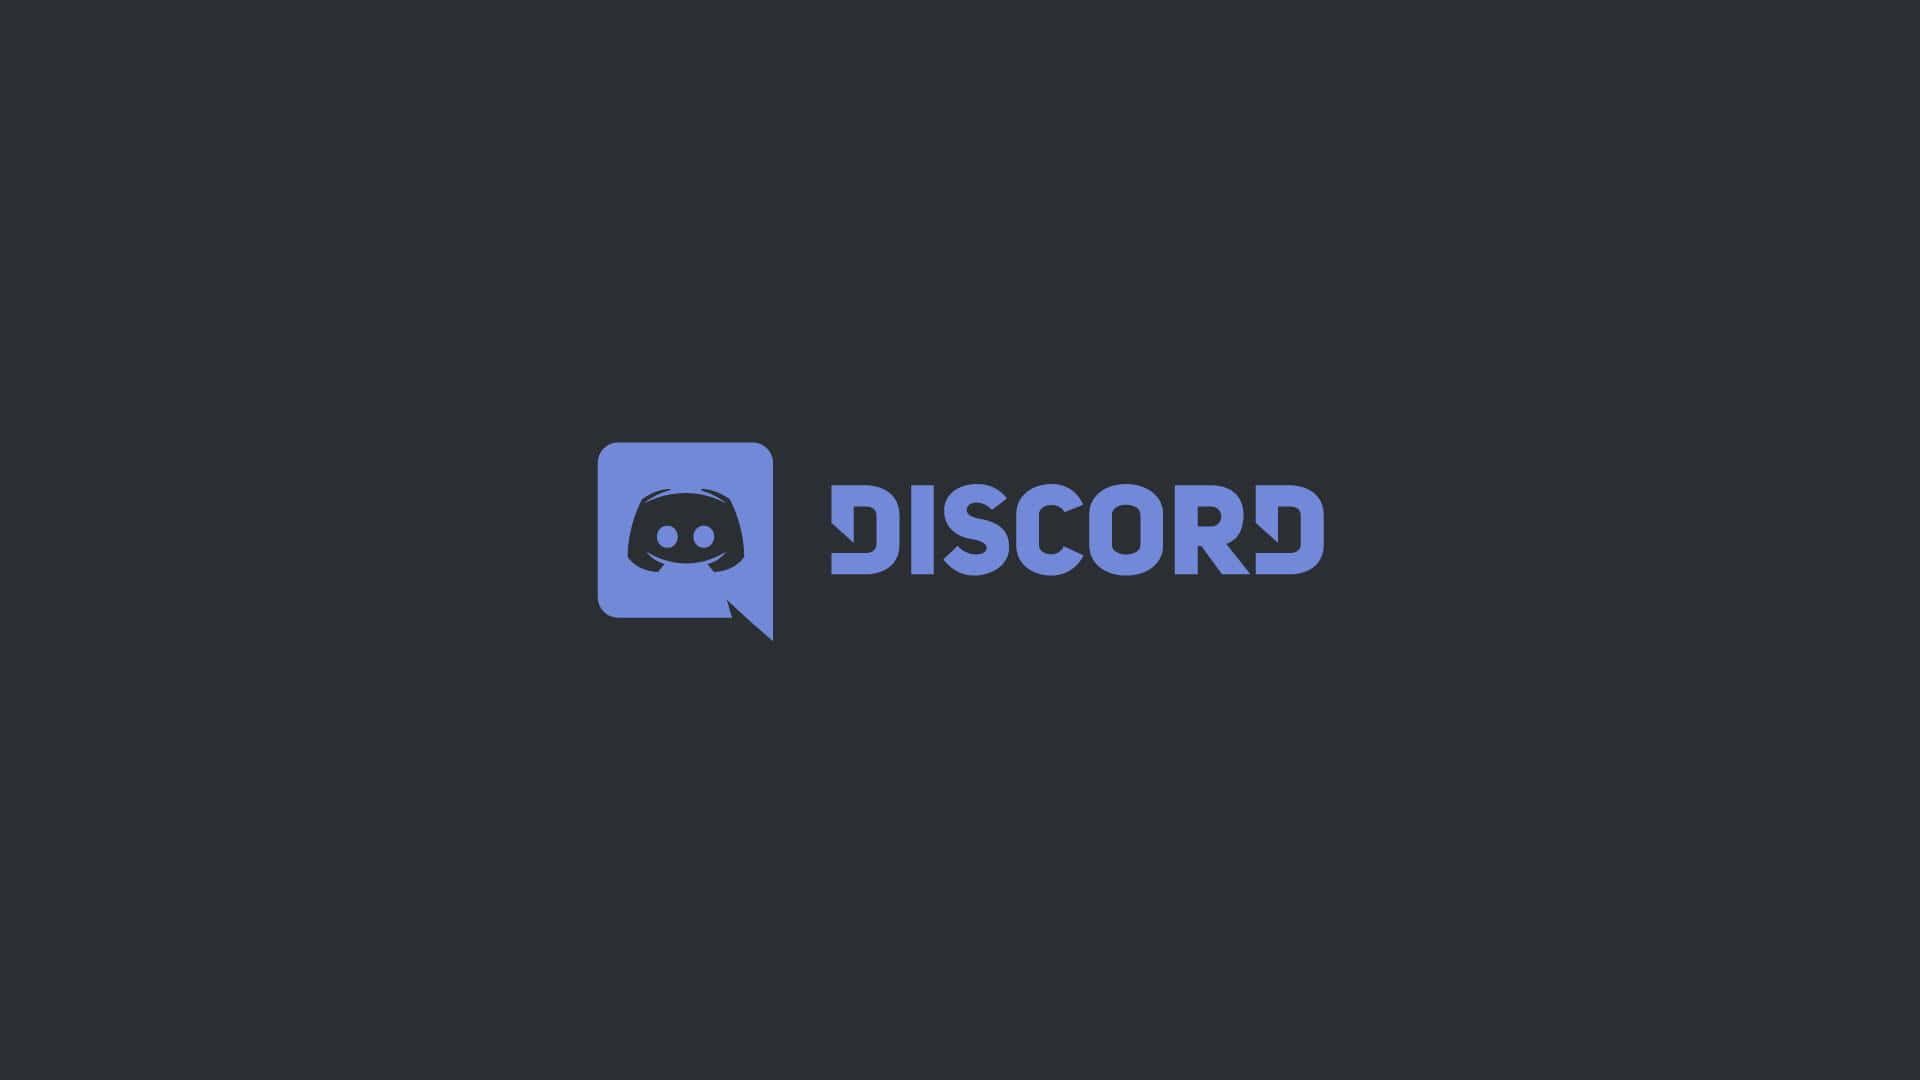 Dark Mode Discord Logo Wallpaper